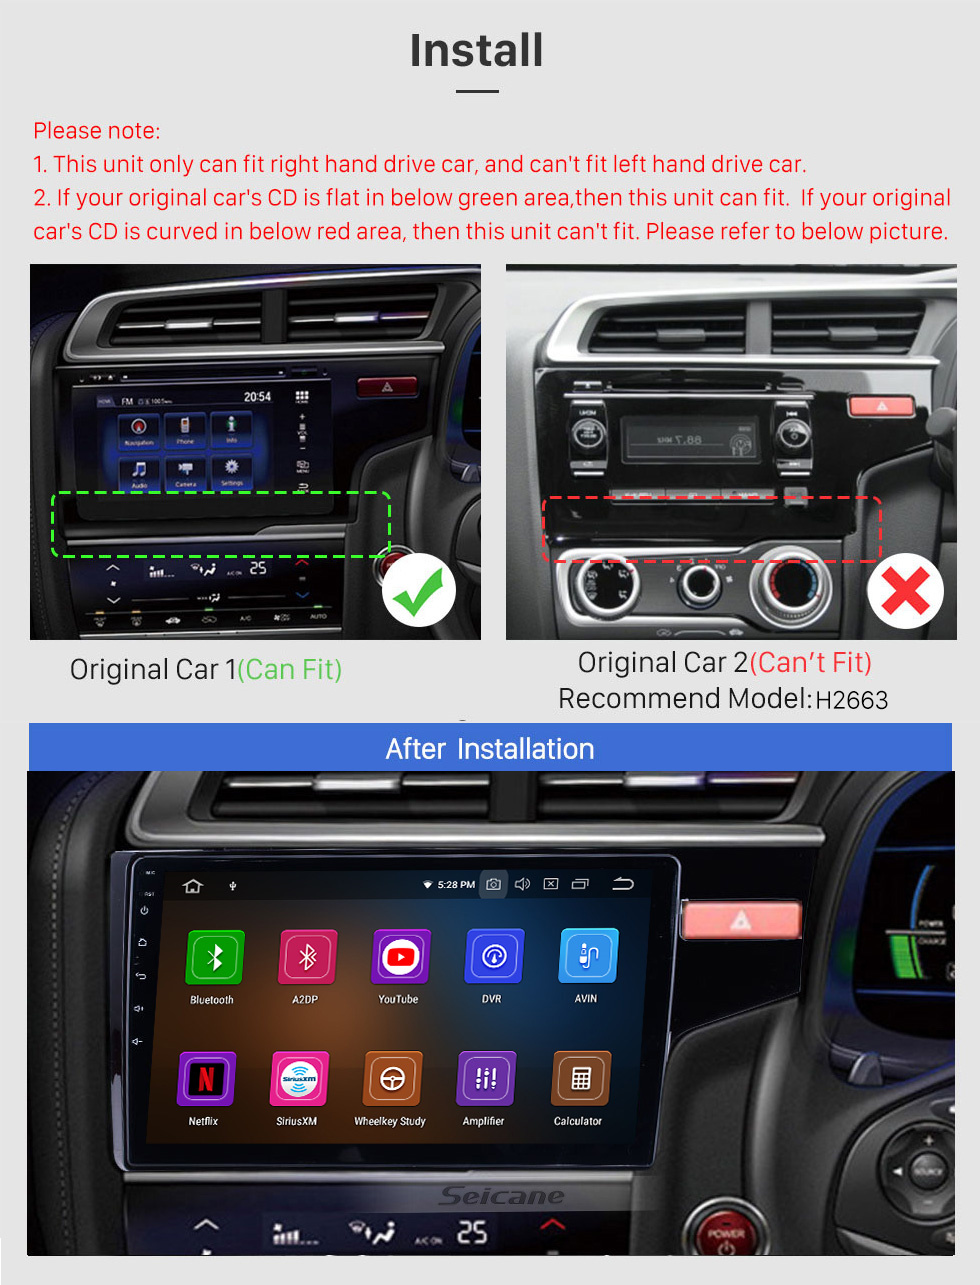 Seicane Aftermarket HD Touchscreen 2014 2015 2016 HONDA FIT RHD Android 11.0 Radio Ersatz durch GPS DVD Player 3G WiFi Bluetooth Musikspiegel Link OBD2 Backup Kamera DVR AUX USB SD 1080P Video